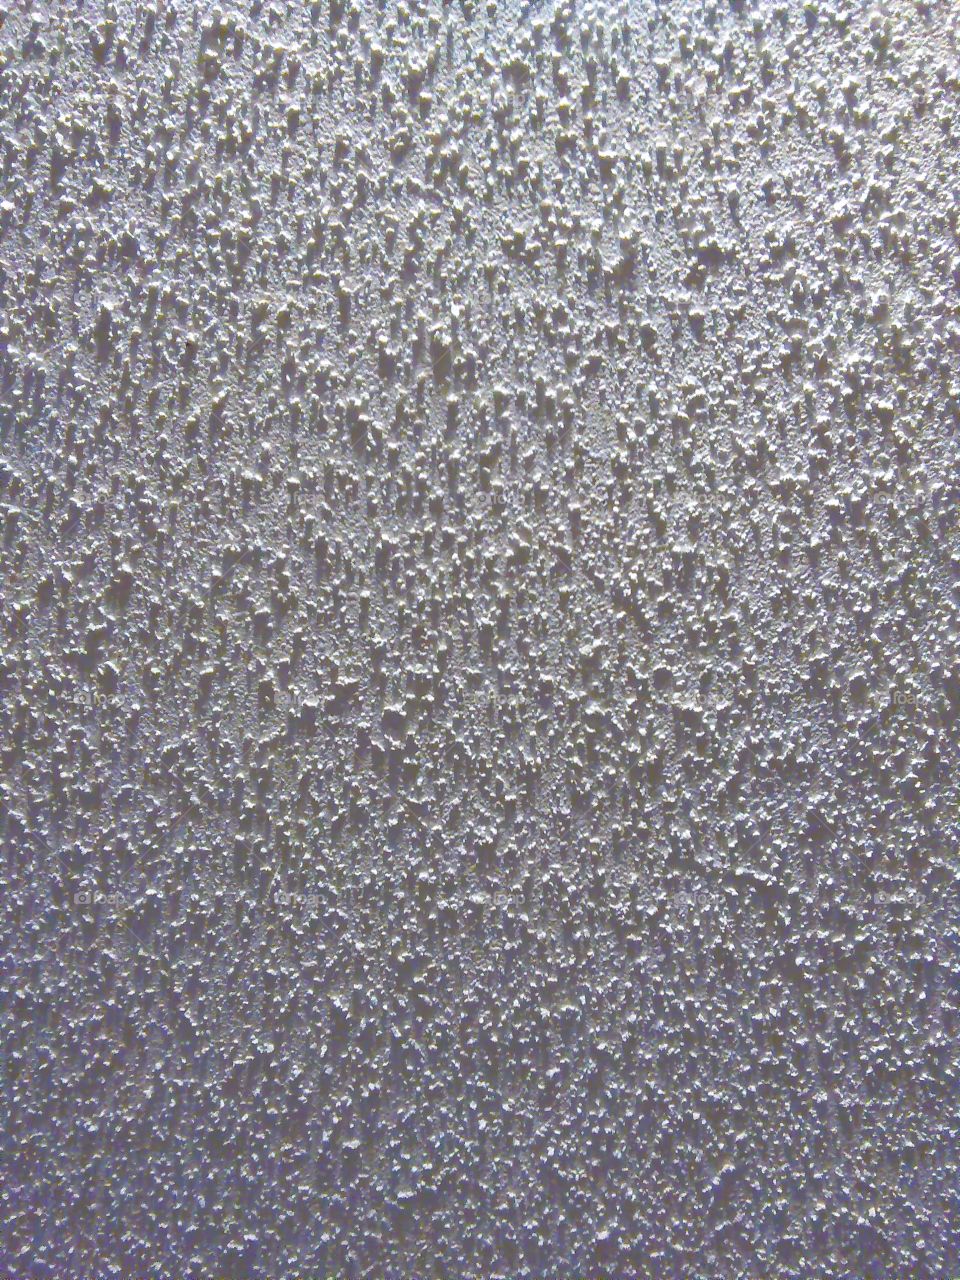 Popcorn ceiling